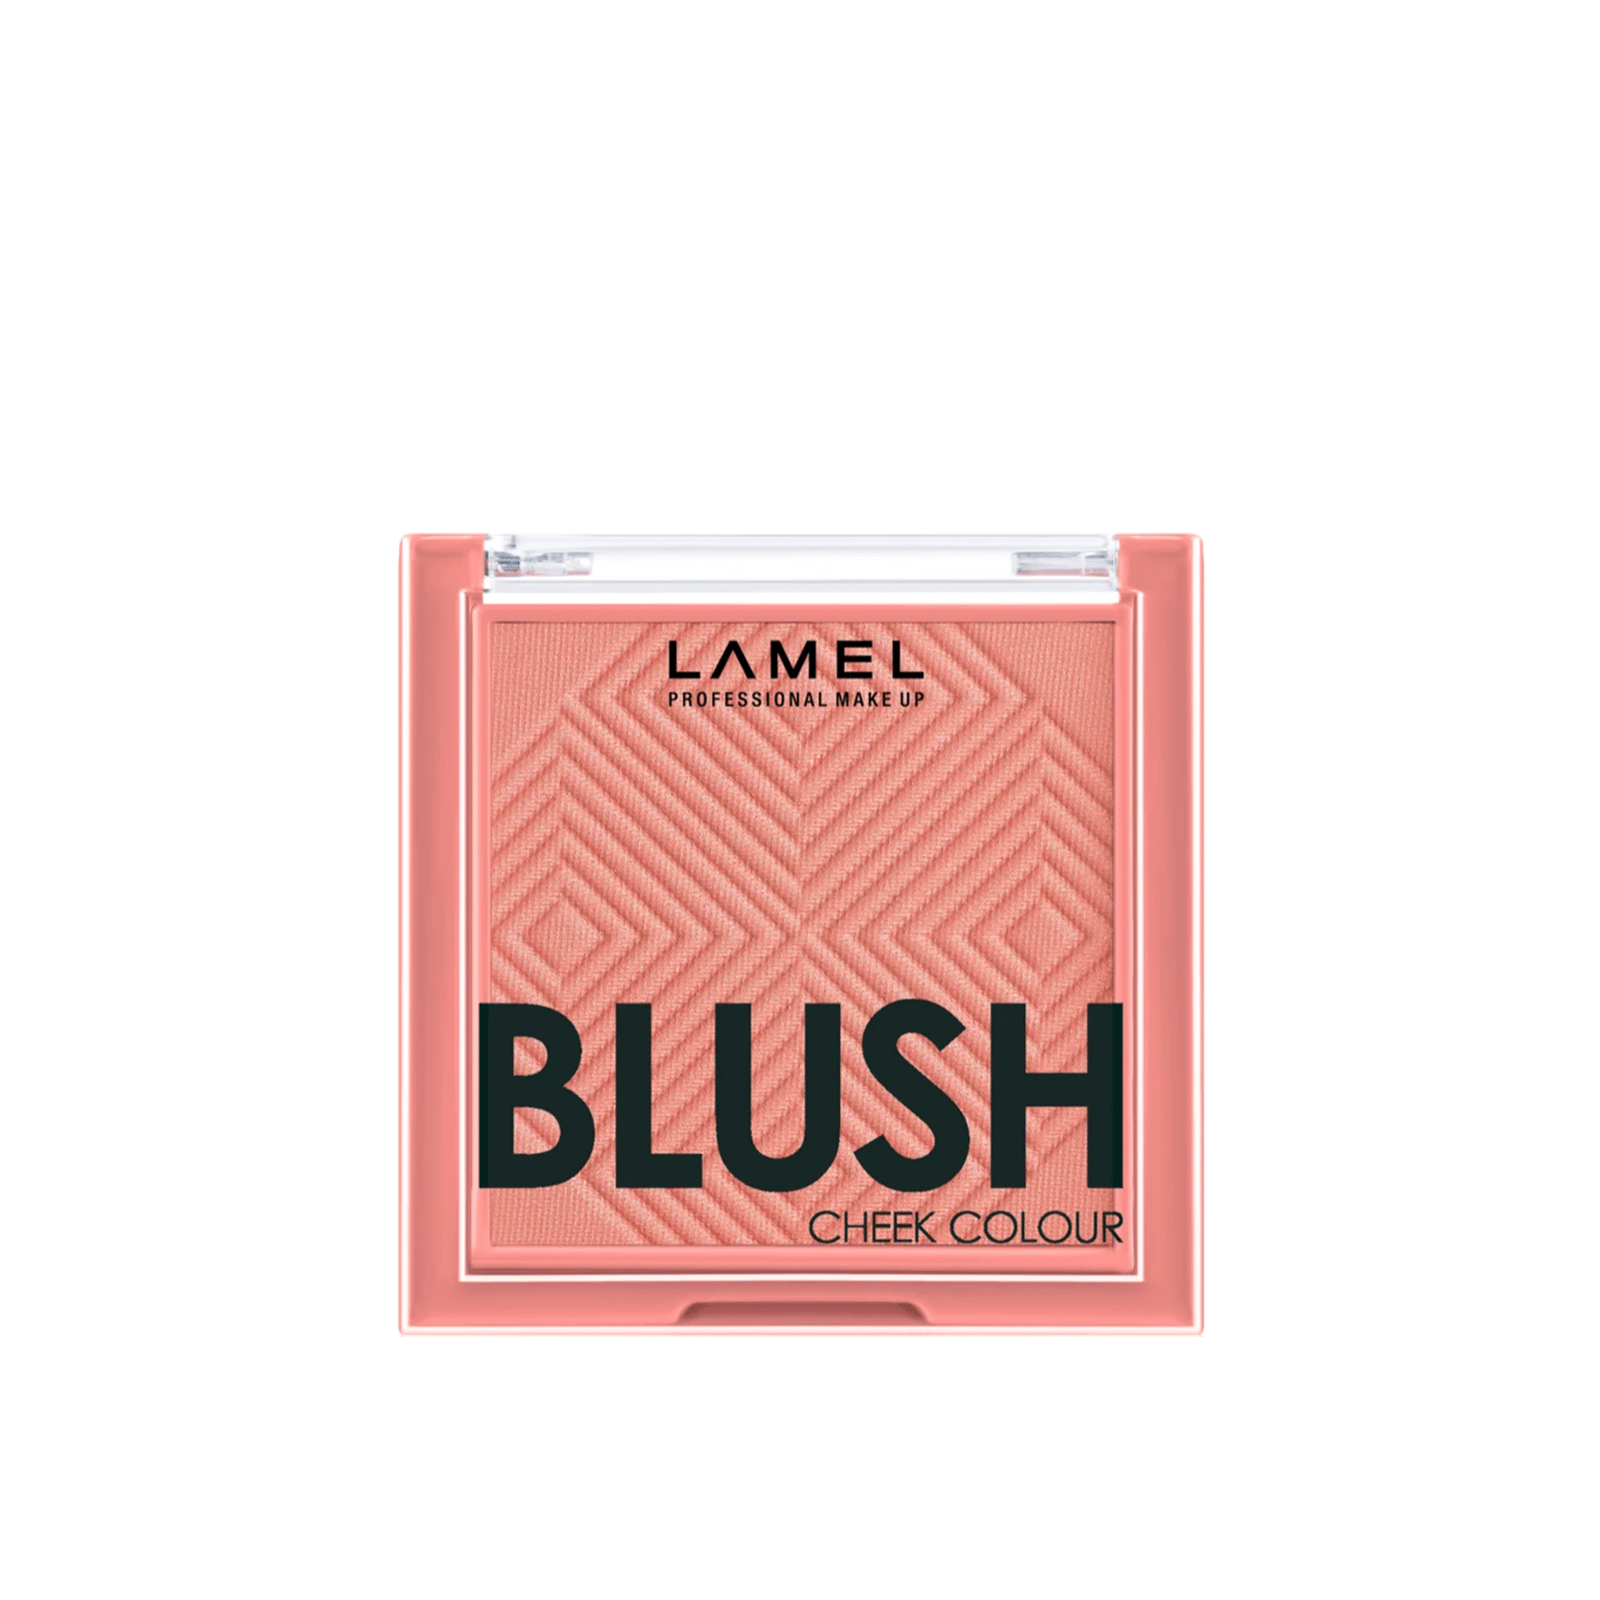 Lamel Blush Cheek Colour 403 Coral 3.8g